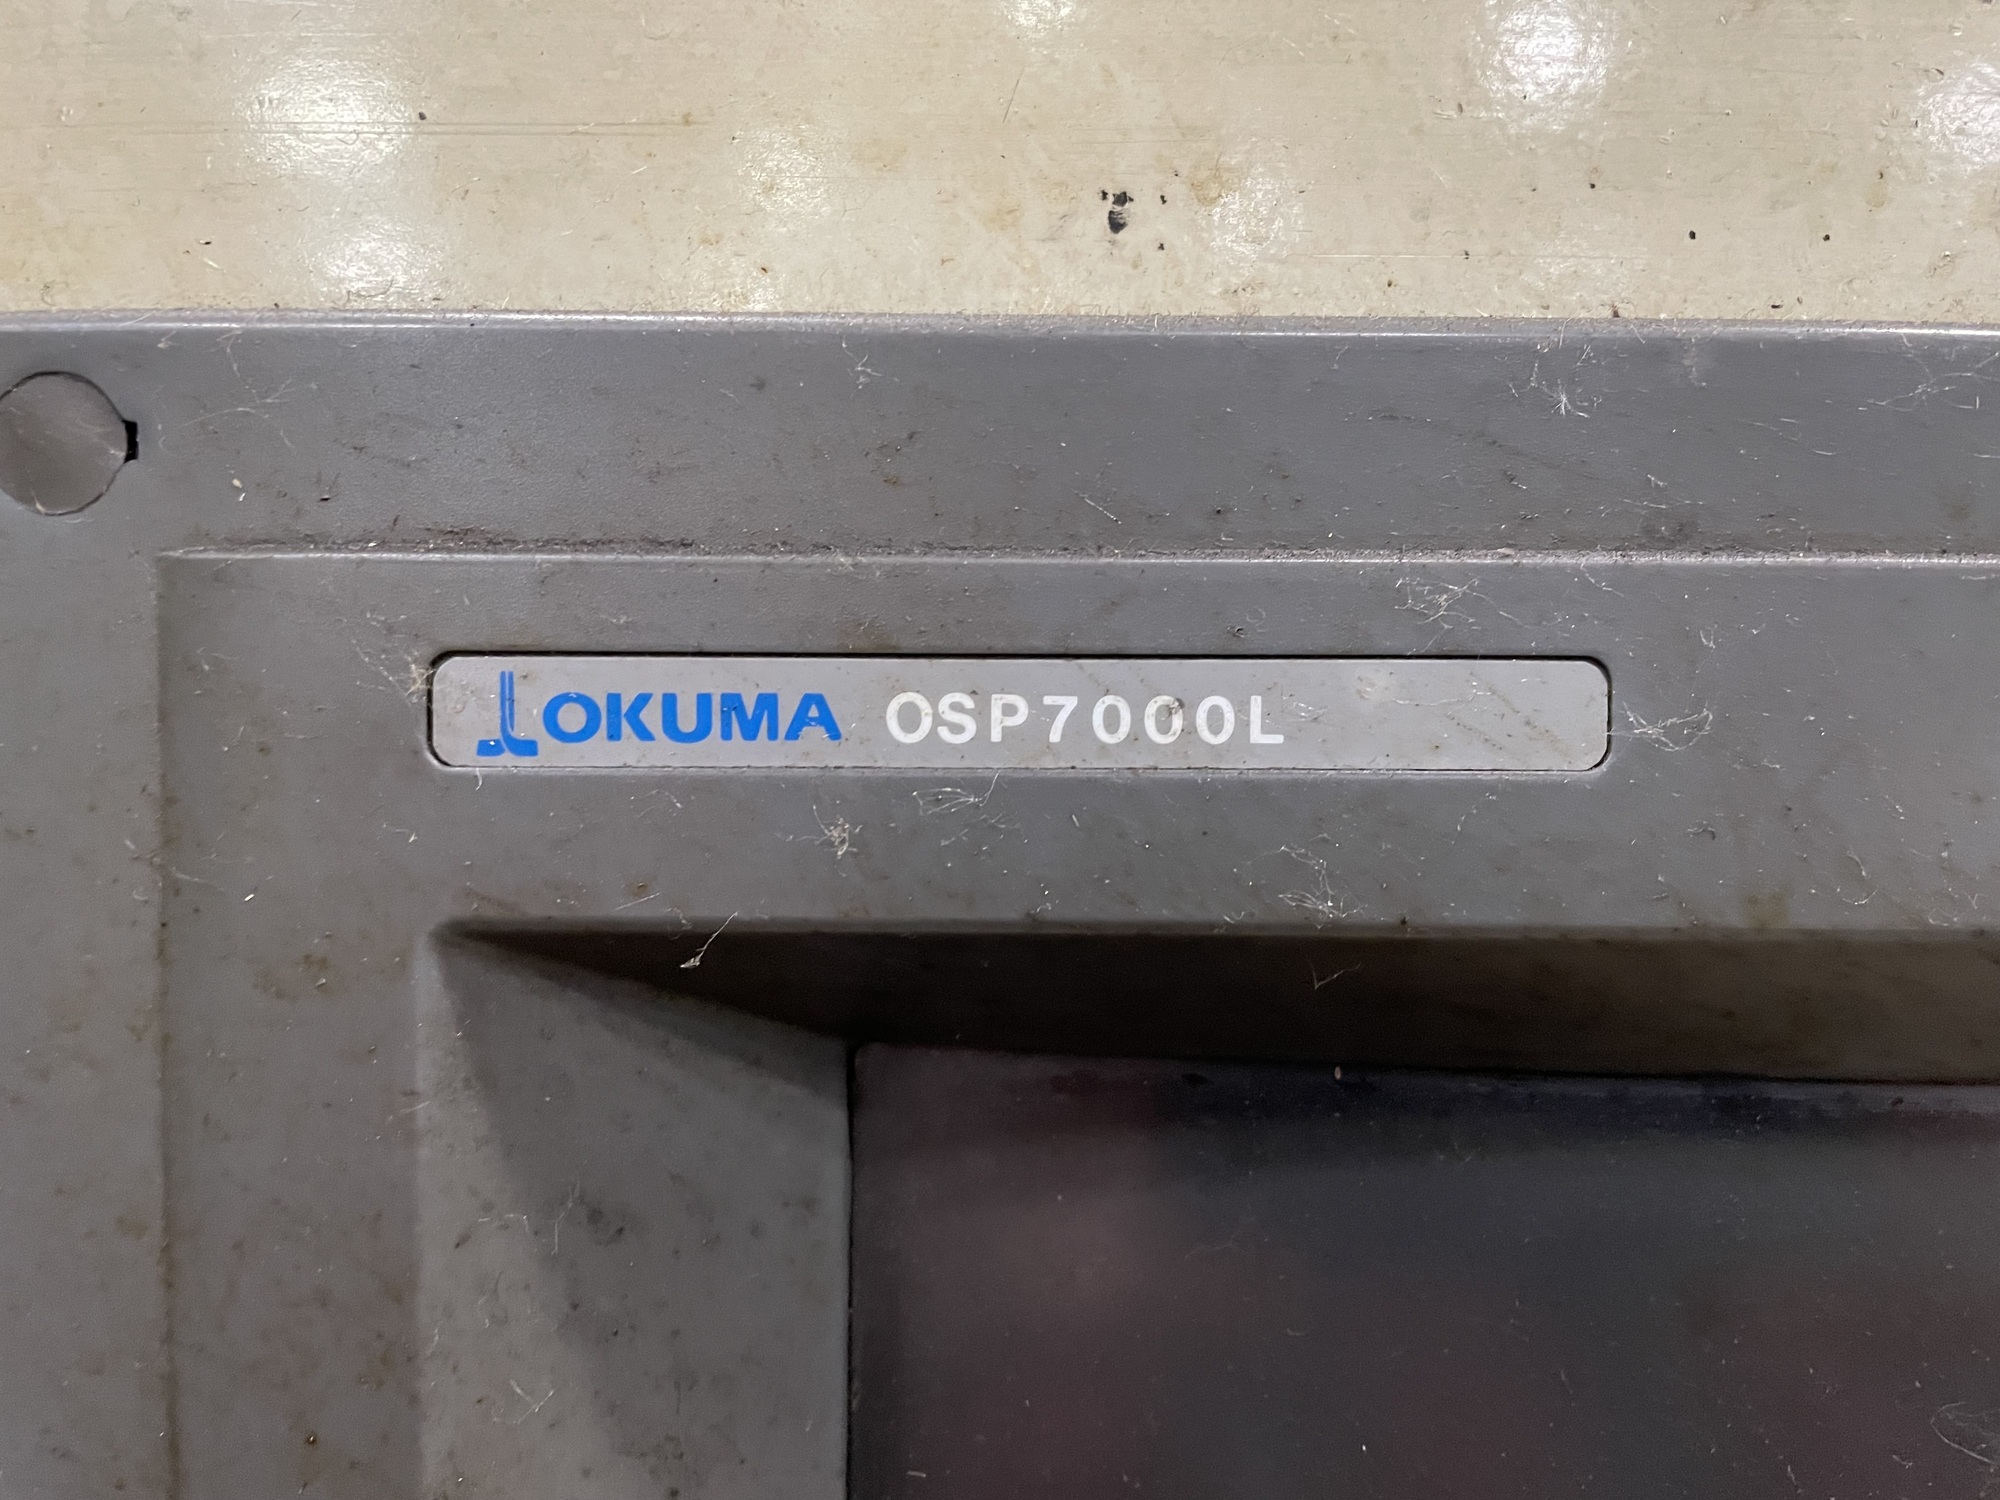 1997 OKUMA IMPACT LU45-2SC/1000 CNC Lathes | Silverlight CNC, Inc